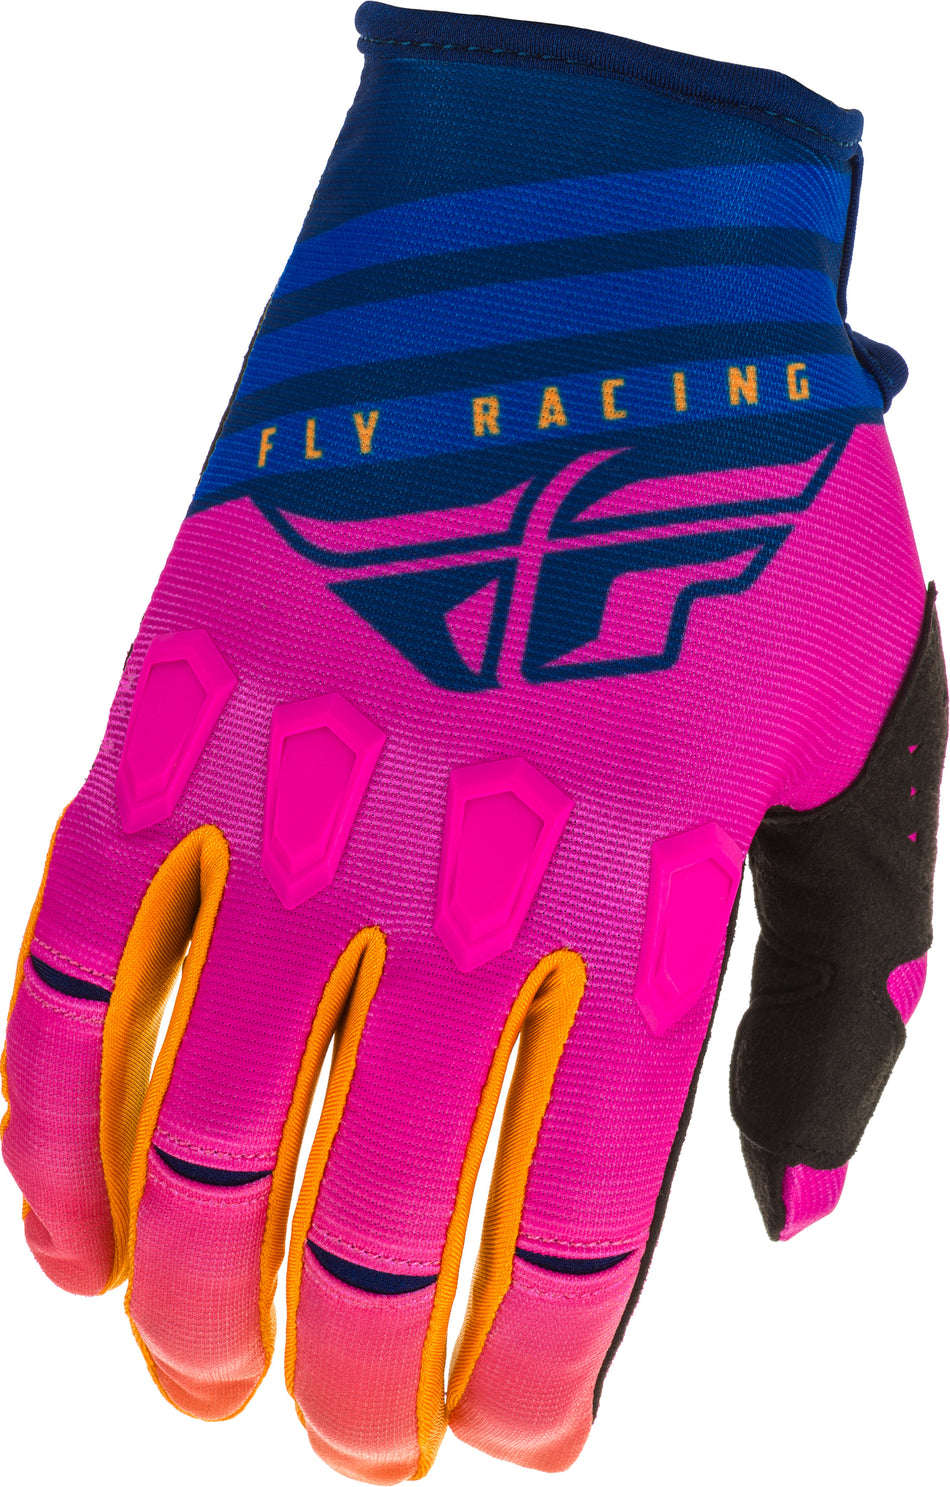 FLY RACING Kinetic K220 Gloves Midnight/Blue/Orange Sz 12 373-51912